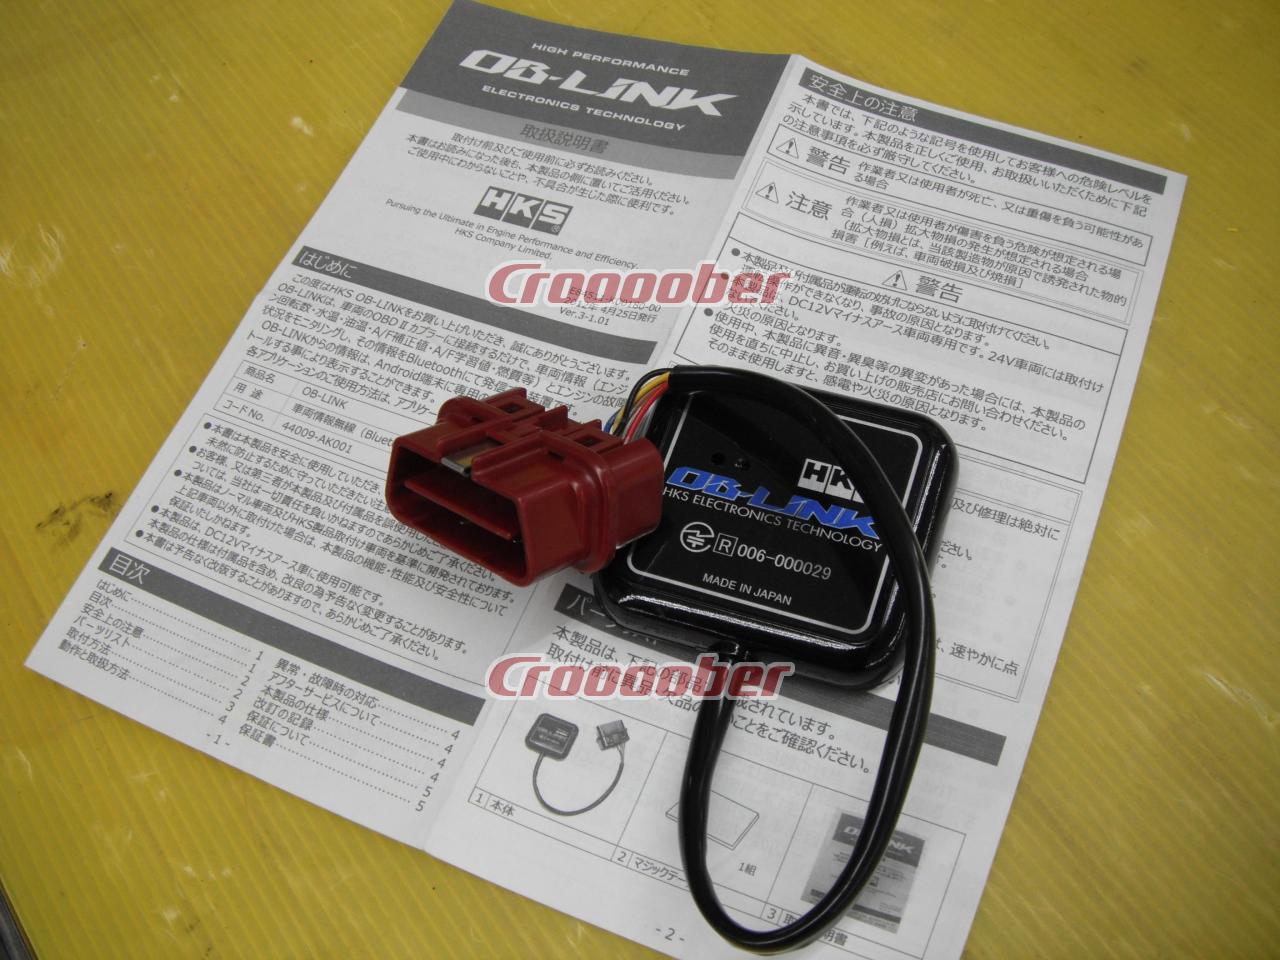 HKS OB-LINK Part Number: 44009-AK001 | Tunning Electronix | Croooober